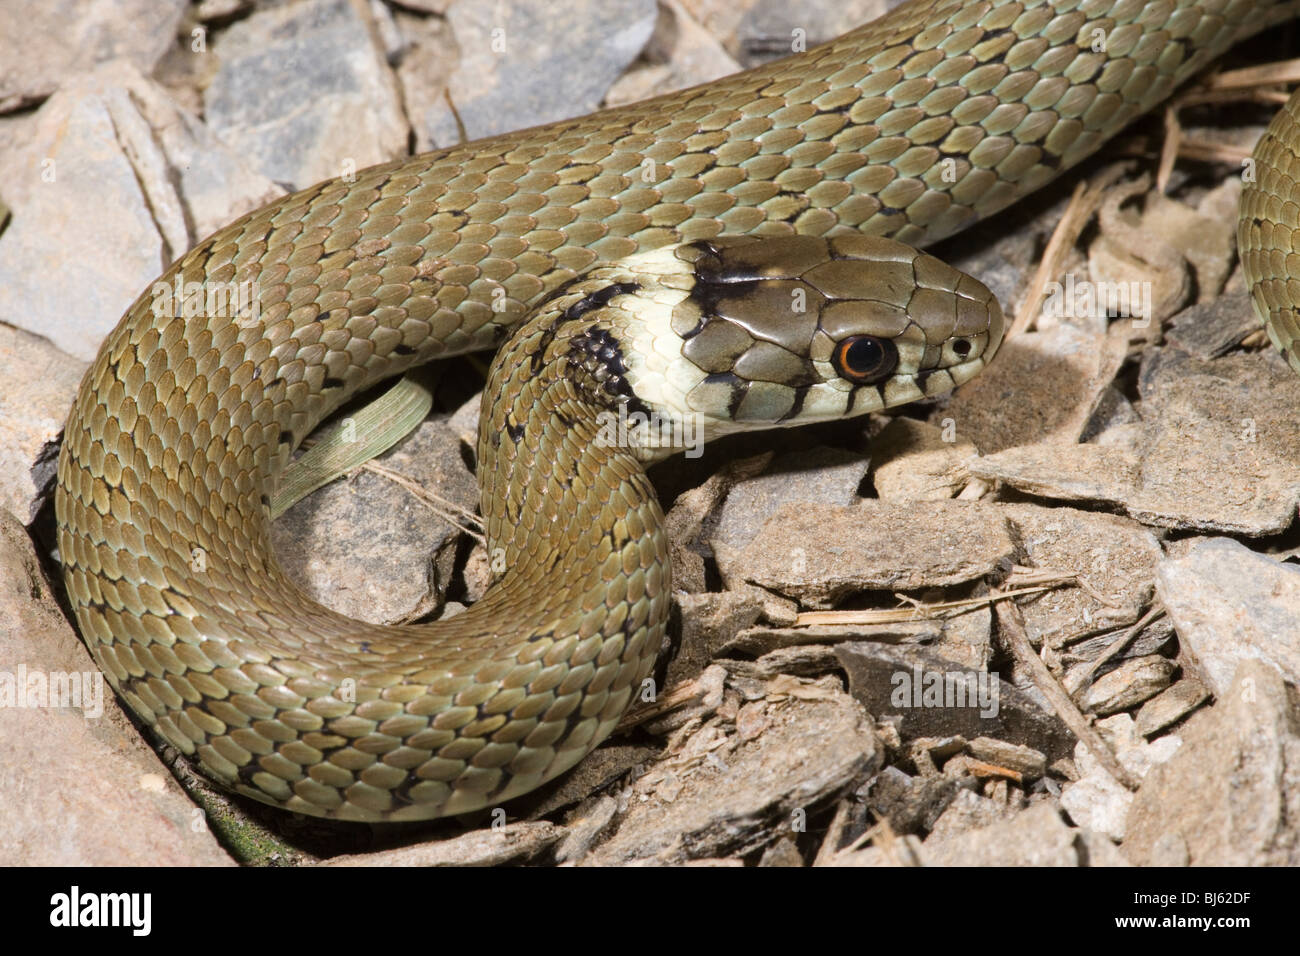 L'Espagnol Grass Snake (Natrix natrix astreptophora). De plus en plus immatures, jeune individu. Cantabria, Espagne. Banque D'Images